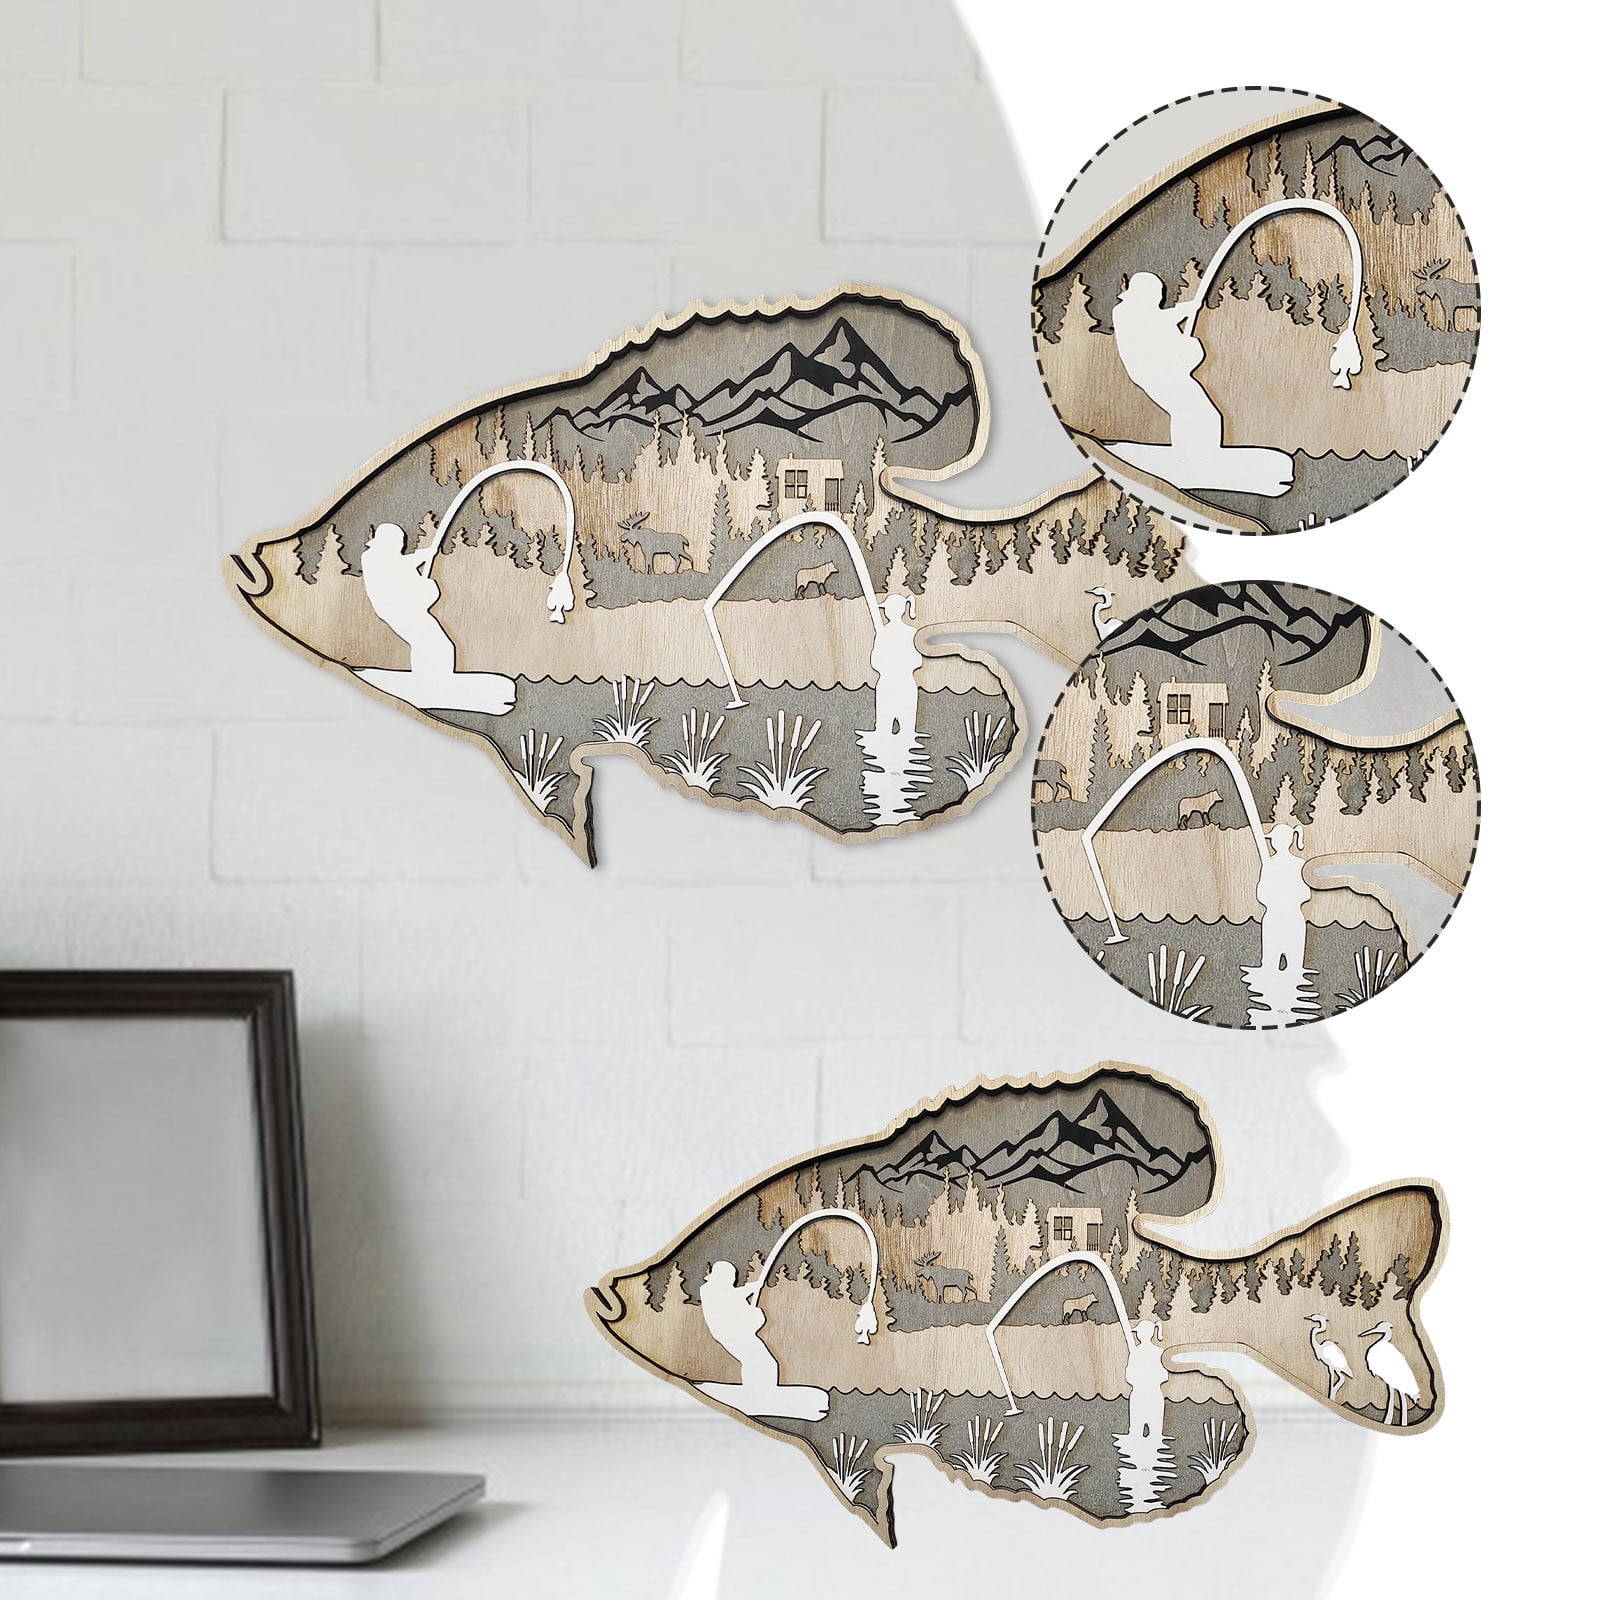 Bass Sculpture Pie Fish Decoration